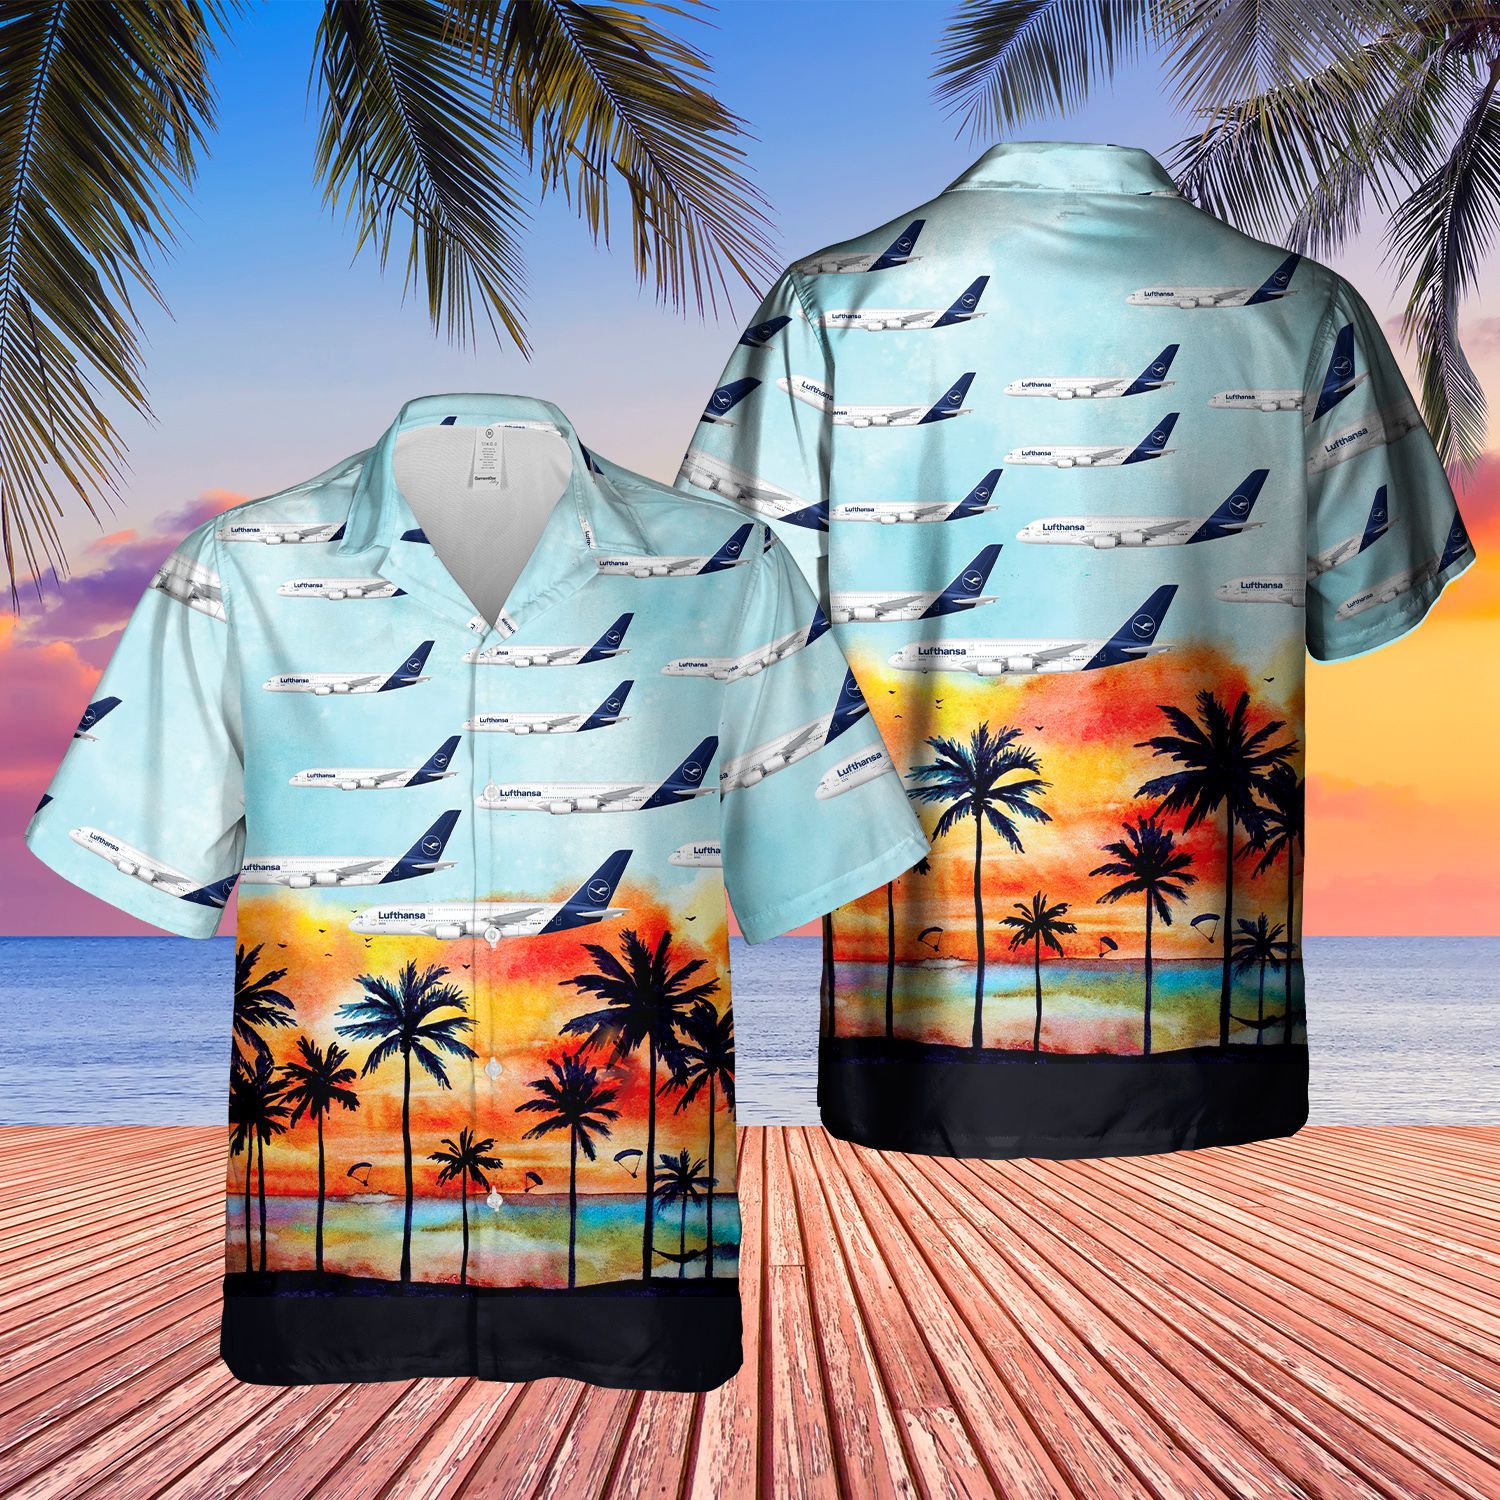 Enjoy your summer with top cool hawaiian shirt below 208